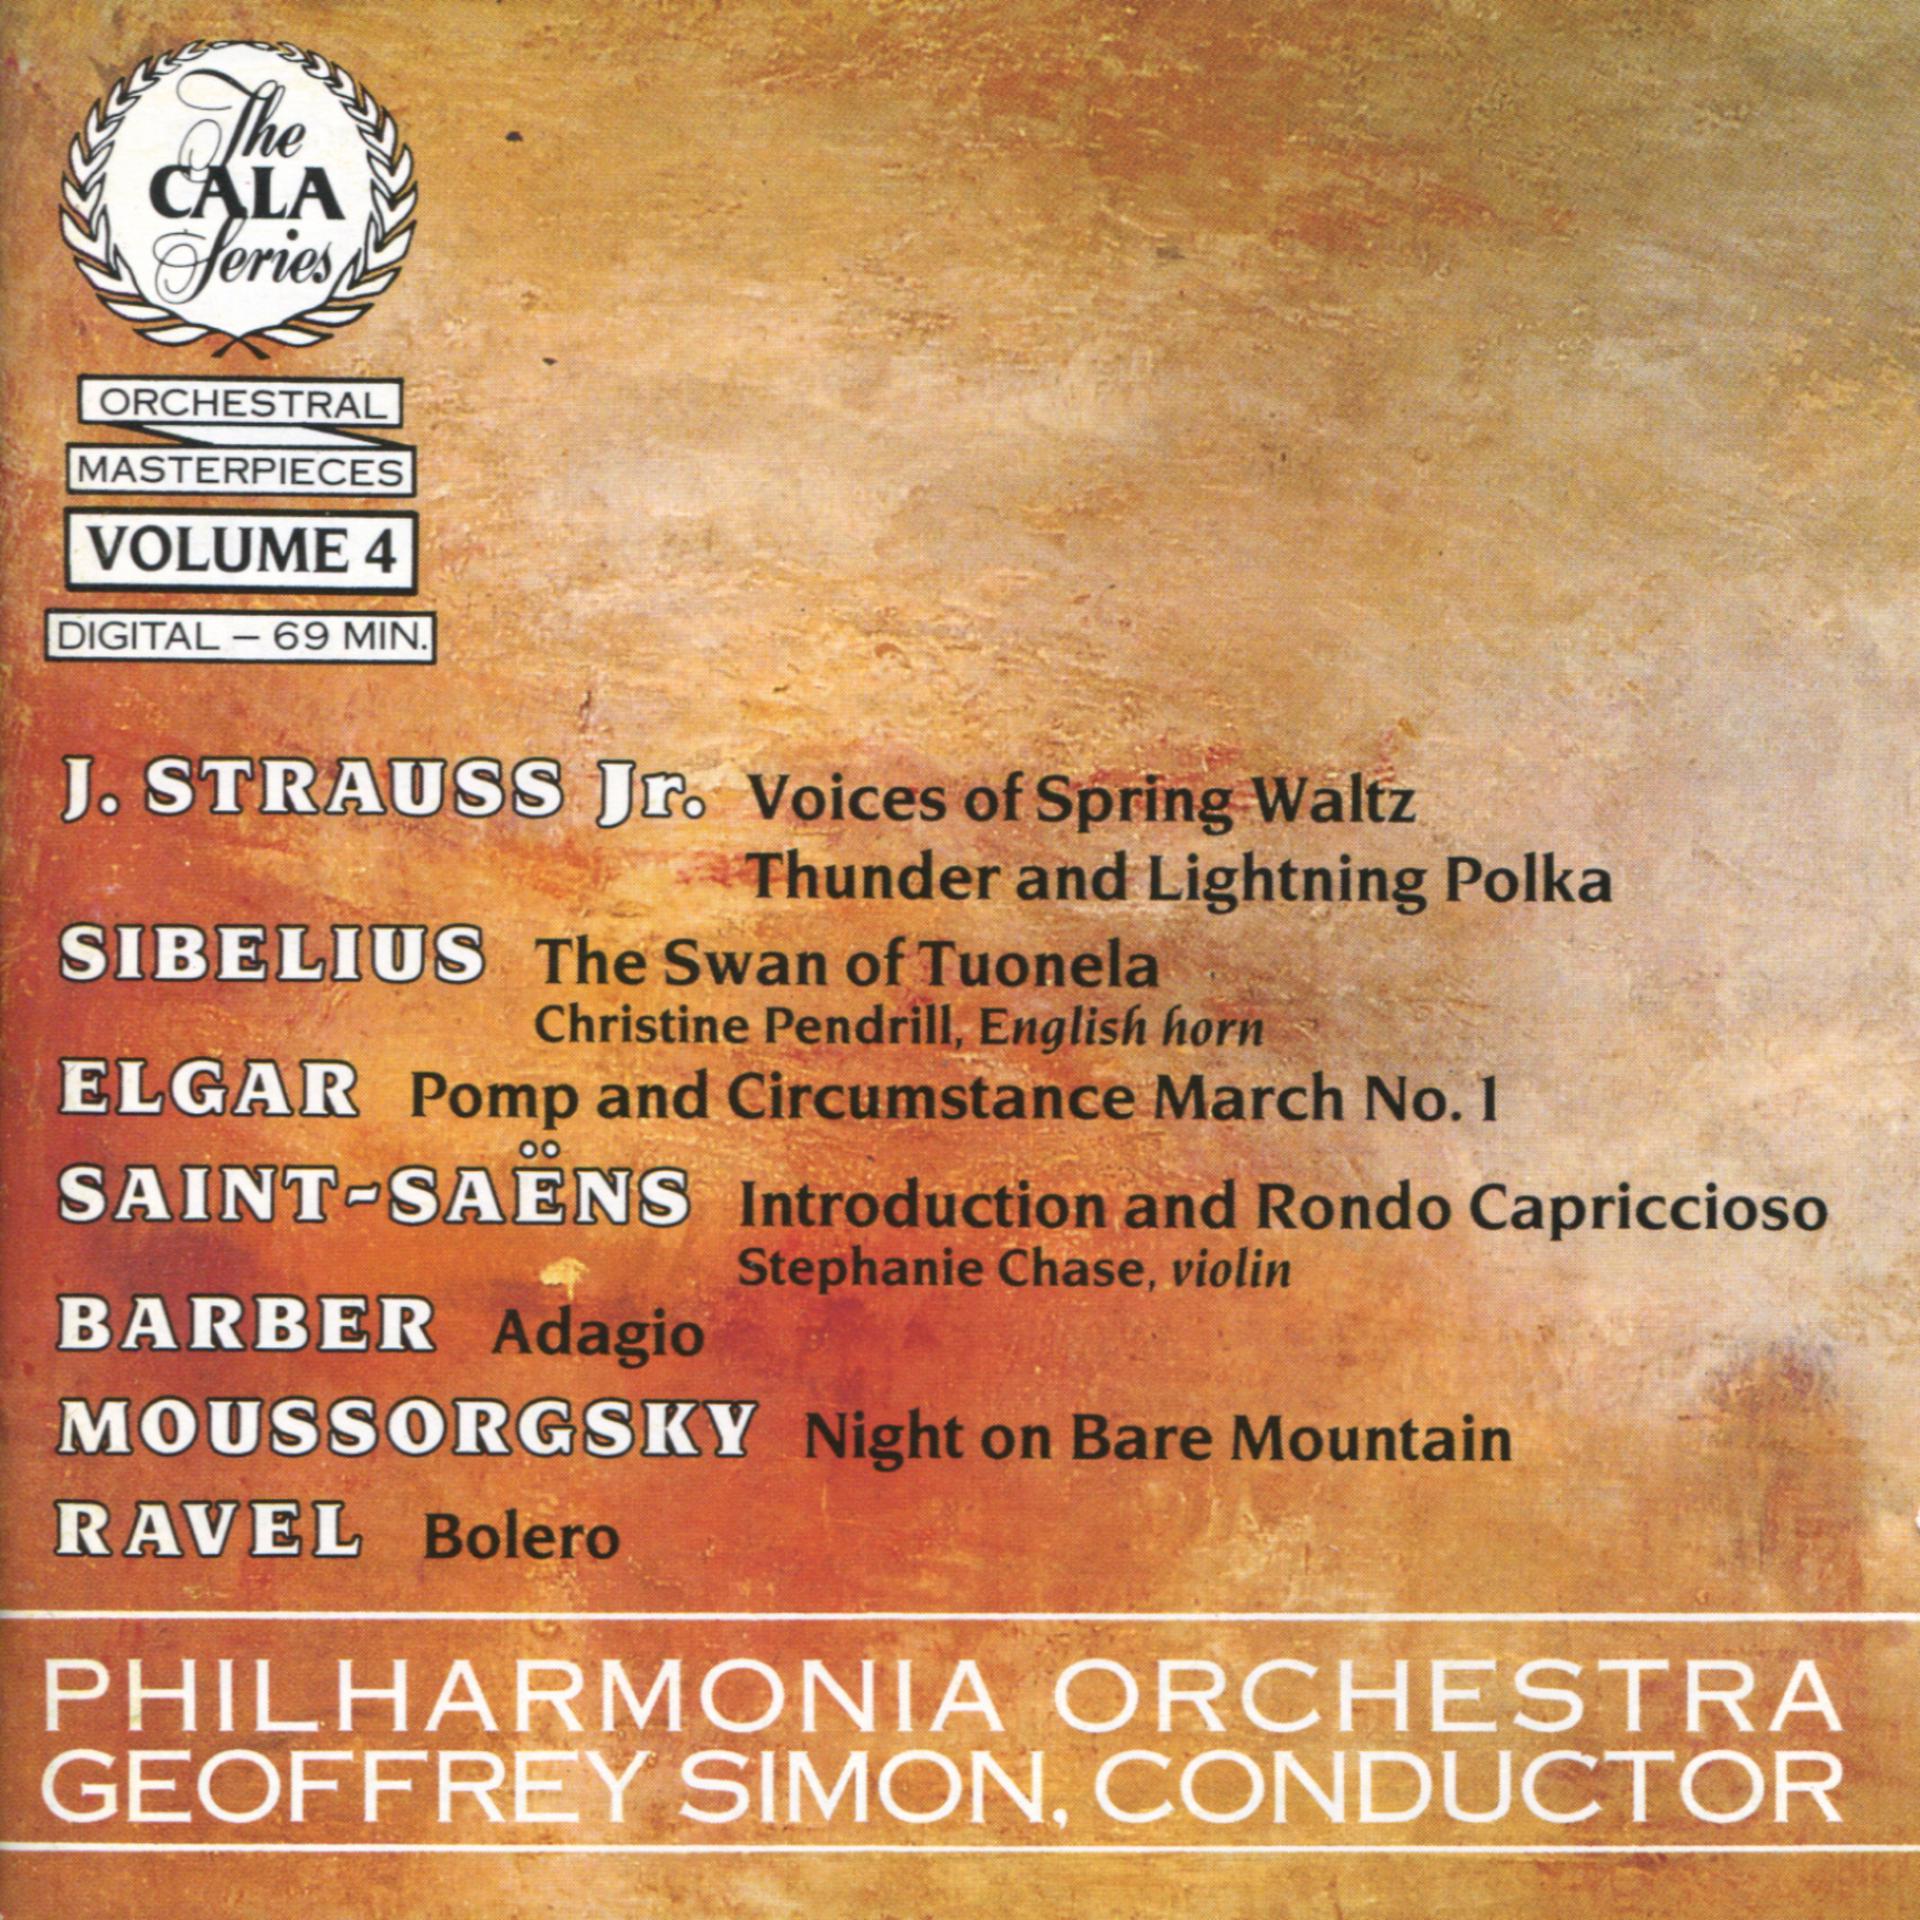 Постер альбома The Cala Series, Vol. 4 - Strauss Jr., Sibelius, Saint-Saëns, Elgar, Barber, Moussorgsky and Ravel